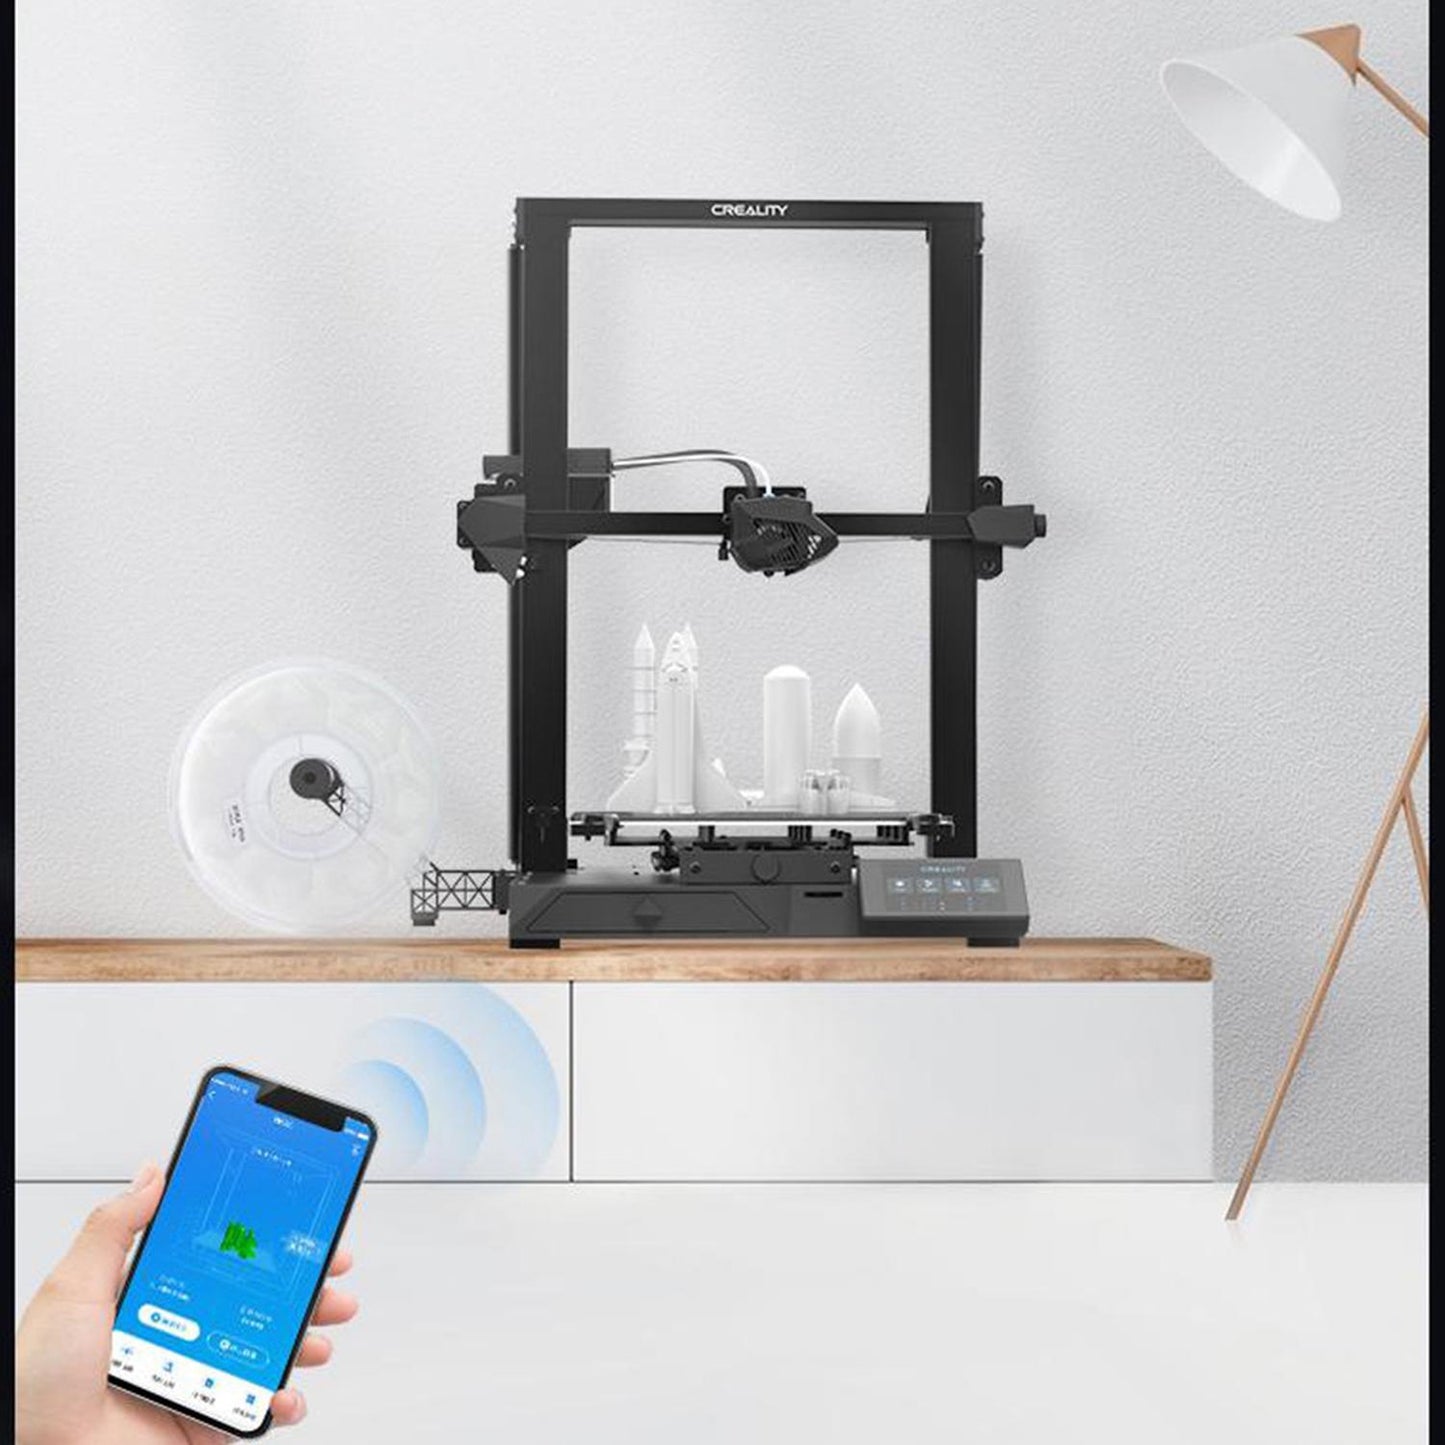 Impresora Creality 3D CR-10 Smart tecnología FDM, WiFi